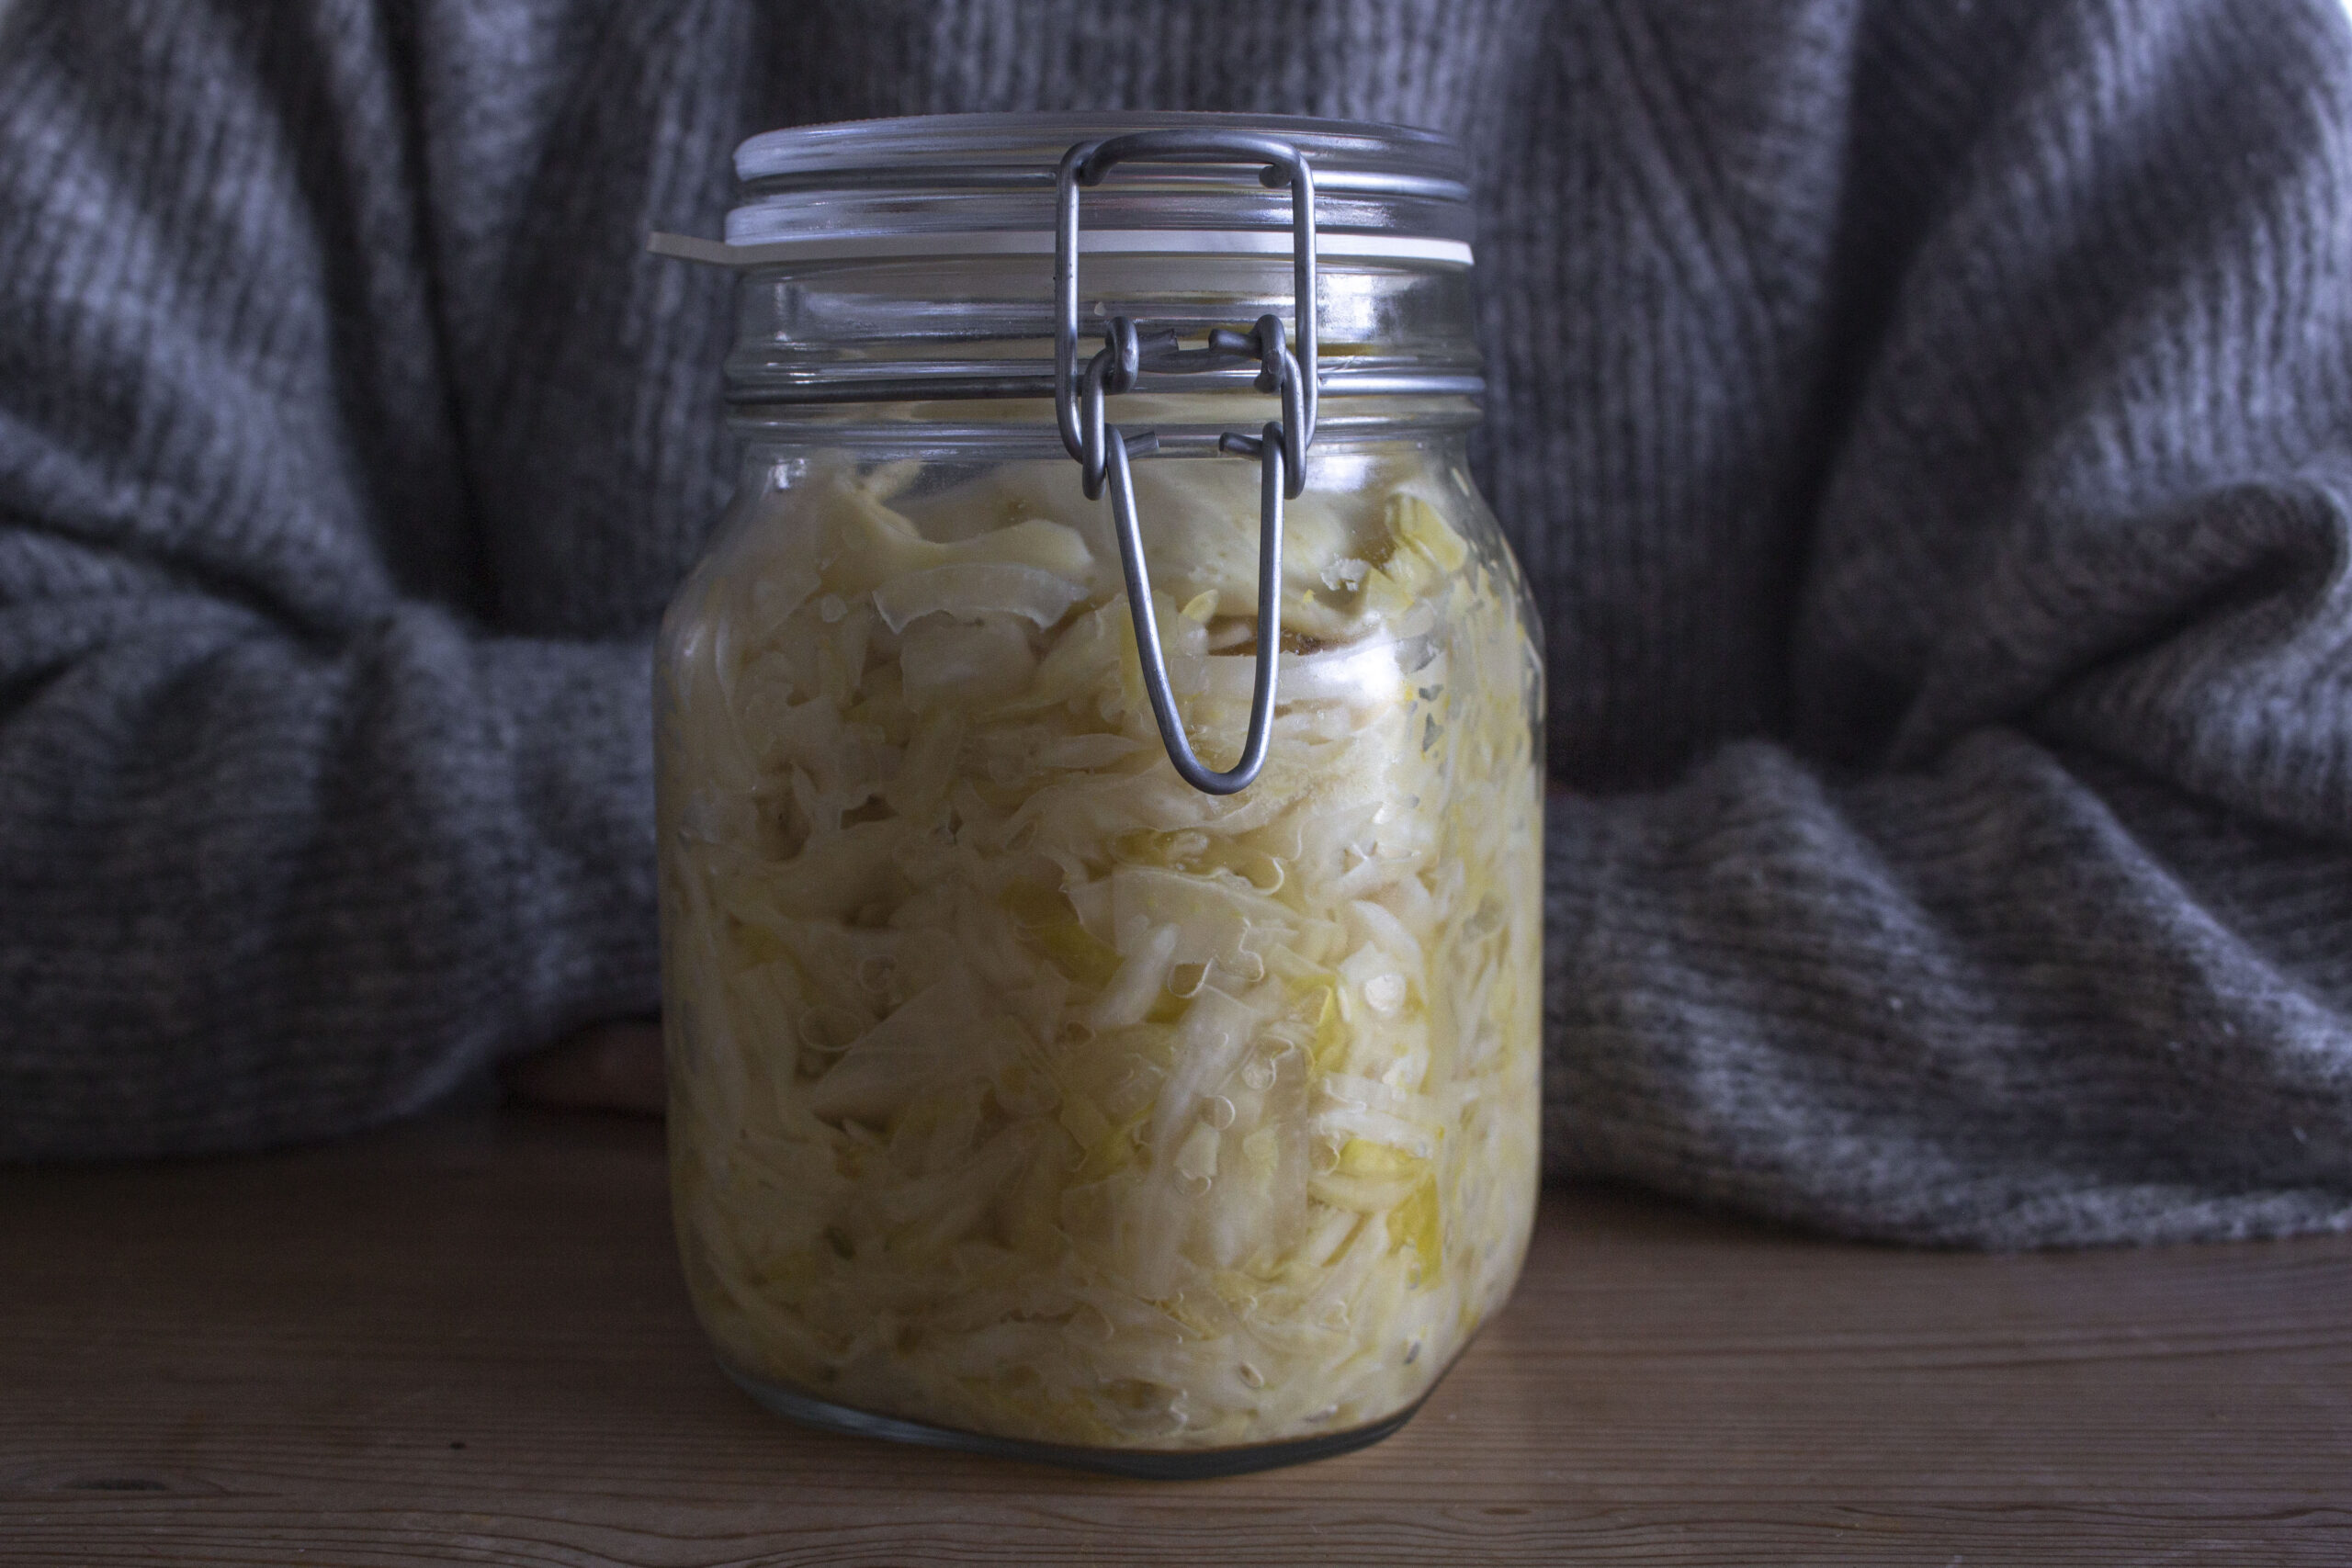 Sauerkraut [ Opskrift: Sådan laver det selv ] Guide til nem fermentering